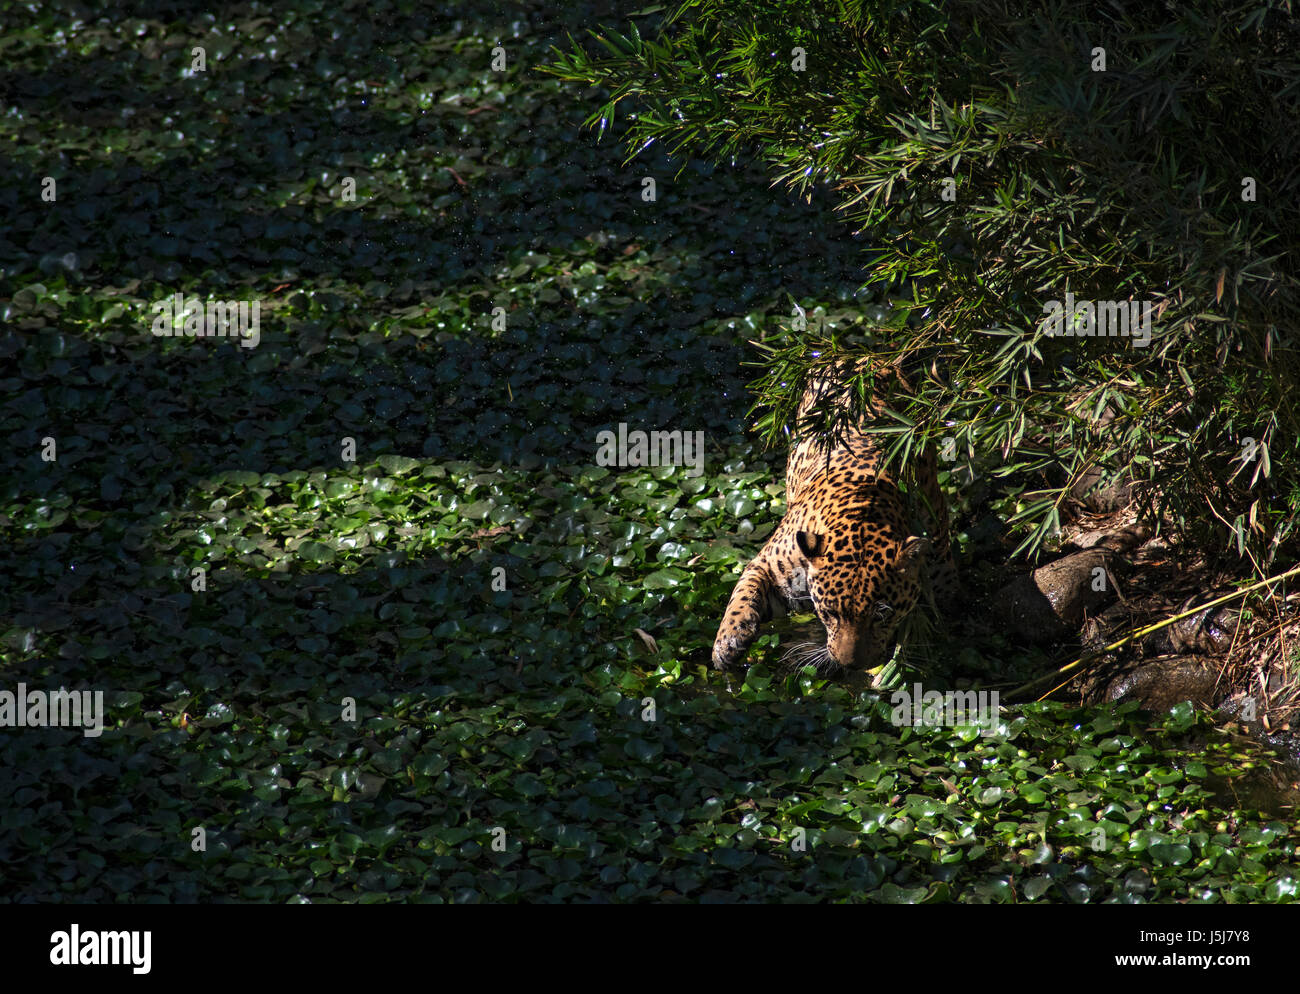 A jaguar in Guatemala City's zoo Stock Photo